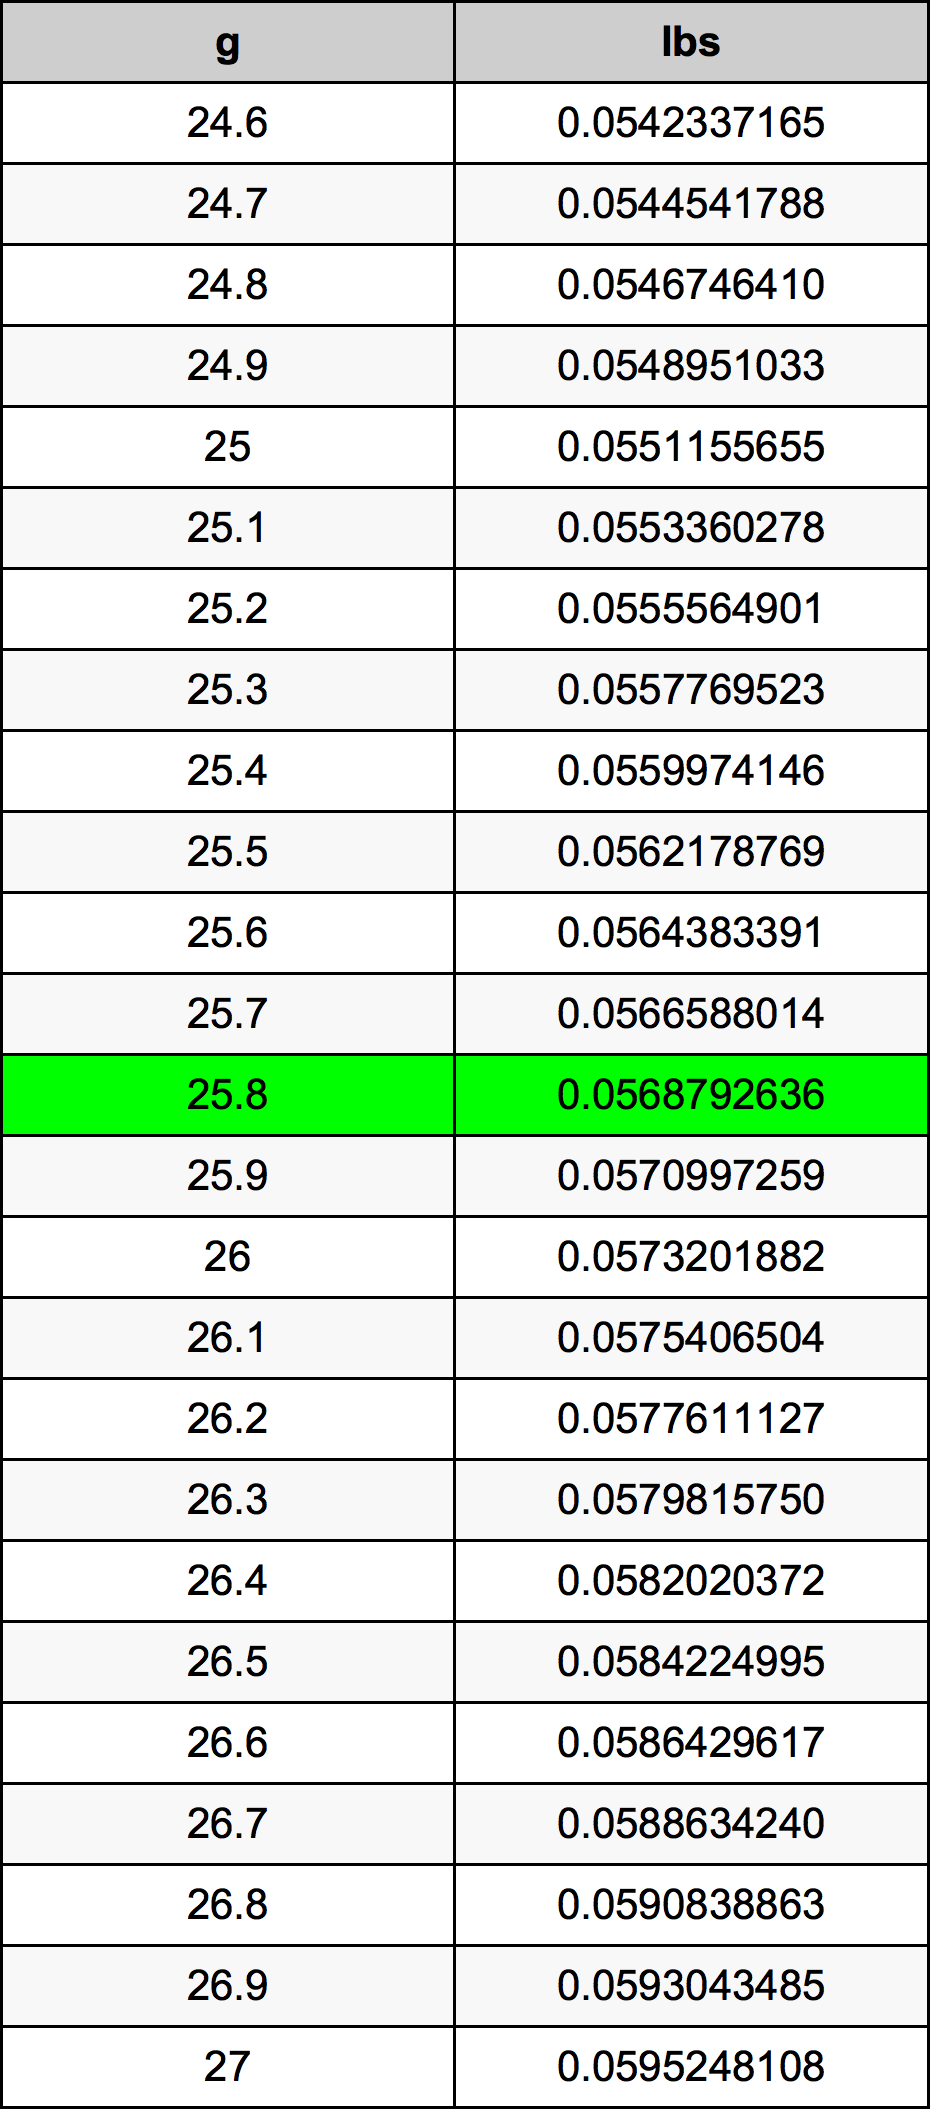 25.8 غرام جدول تحويل